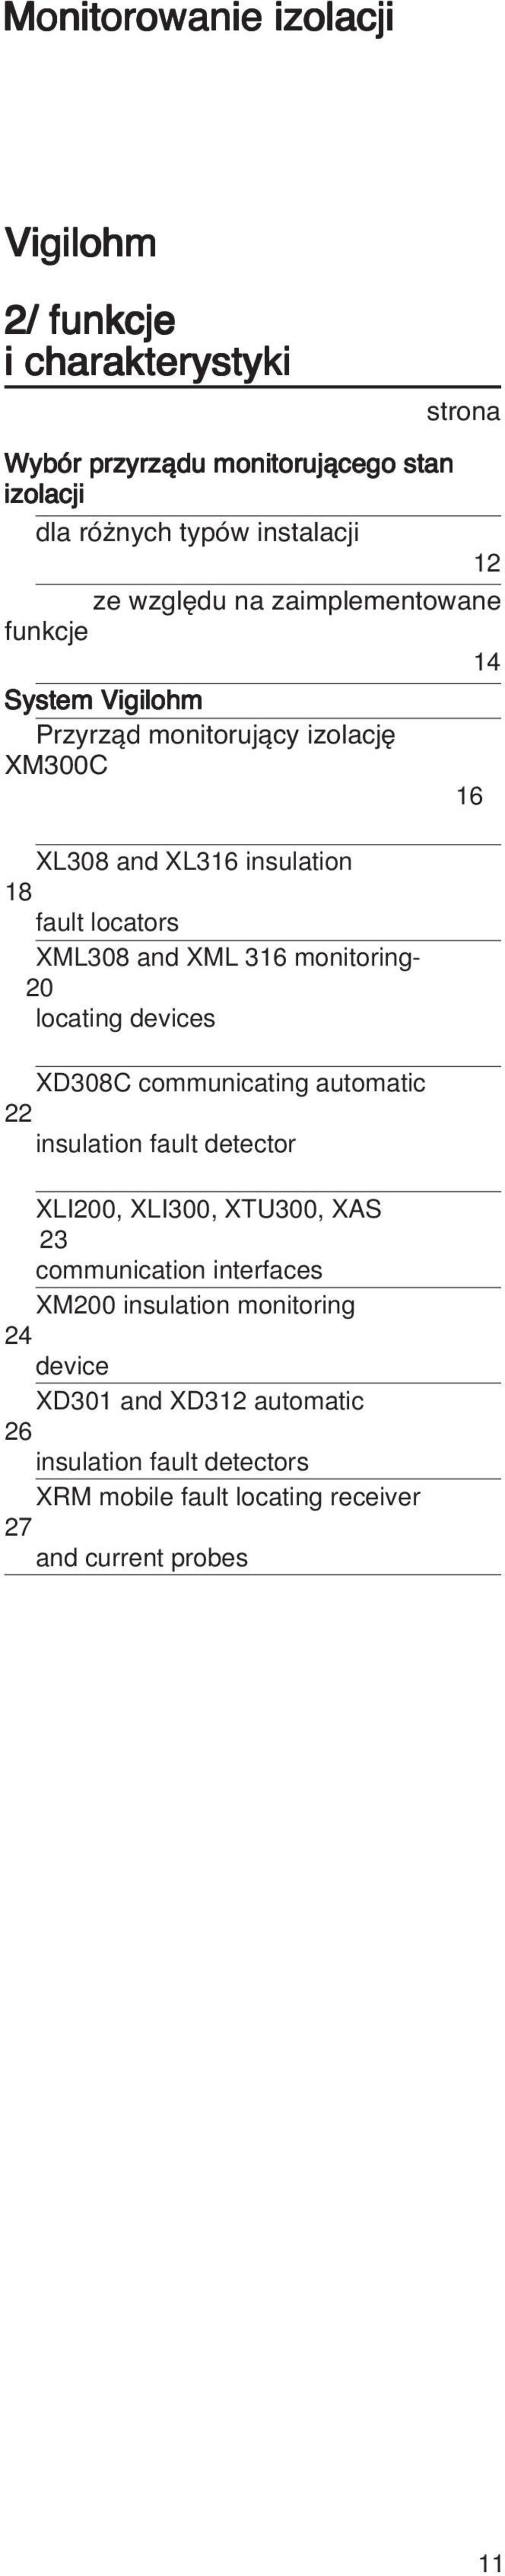 XL 316 monitoring- 20 locating devices XD308C communicating automatic 22 insulation fault detector XLI200, XLI300, XTU300, XAS 23 communication